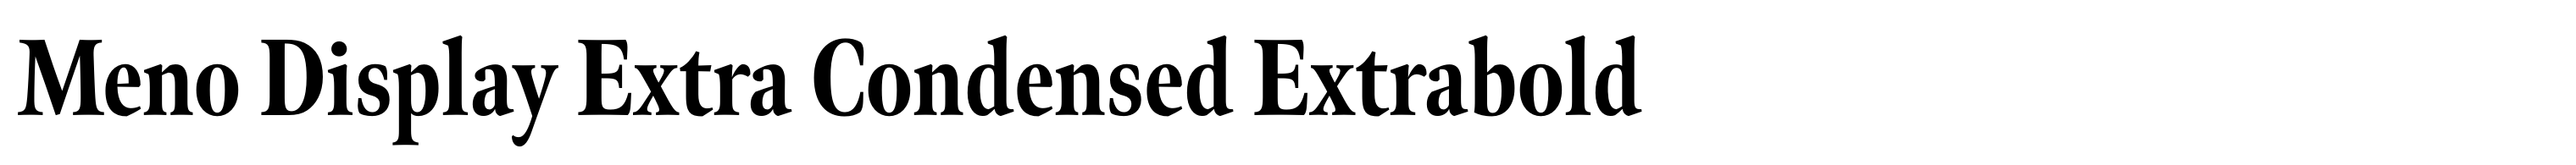 Meno Display Extra Condensed Extrabold